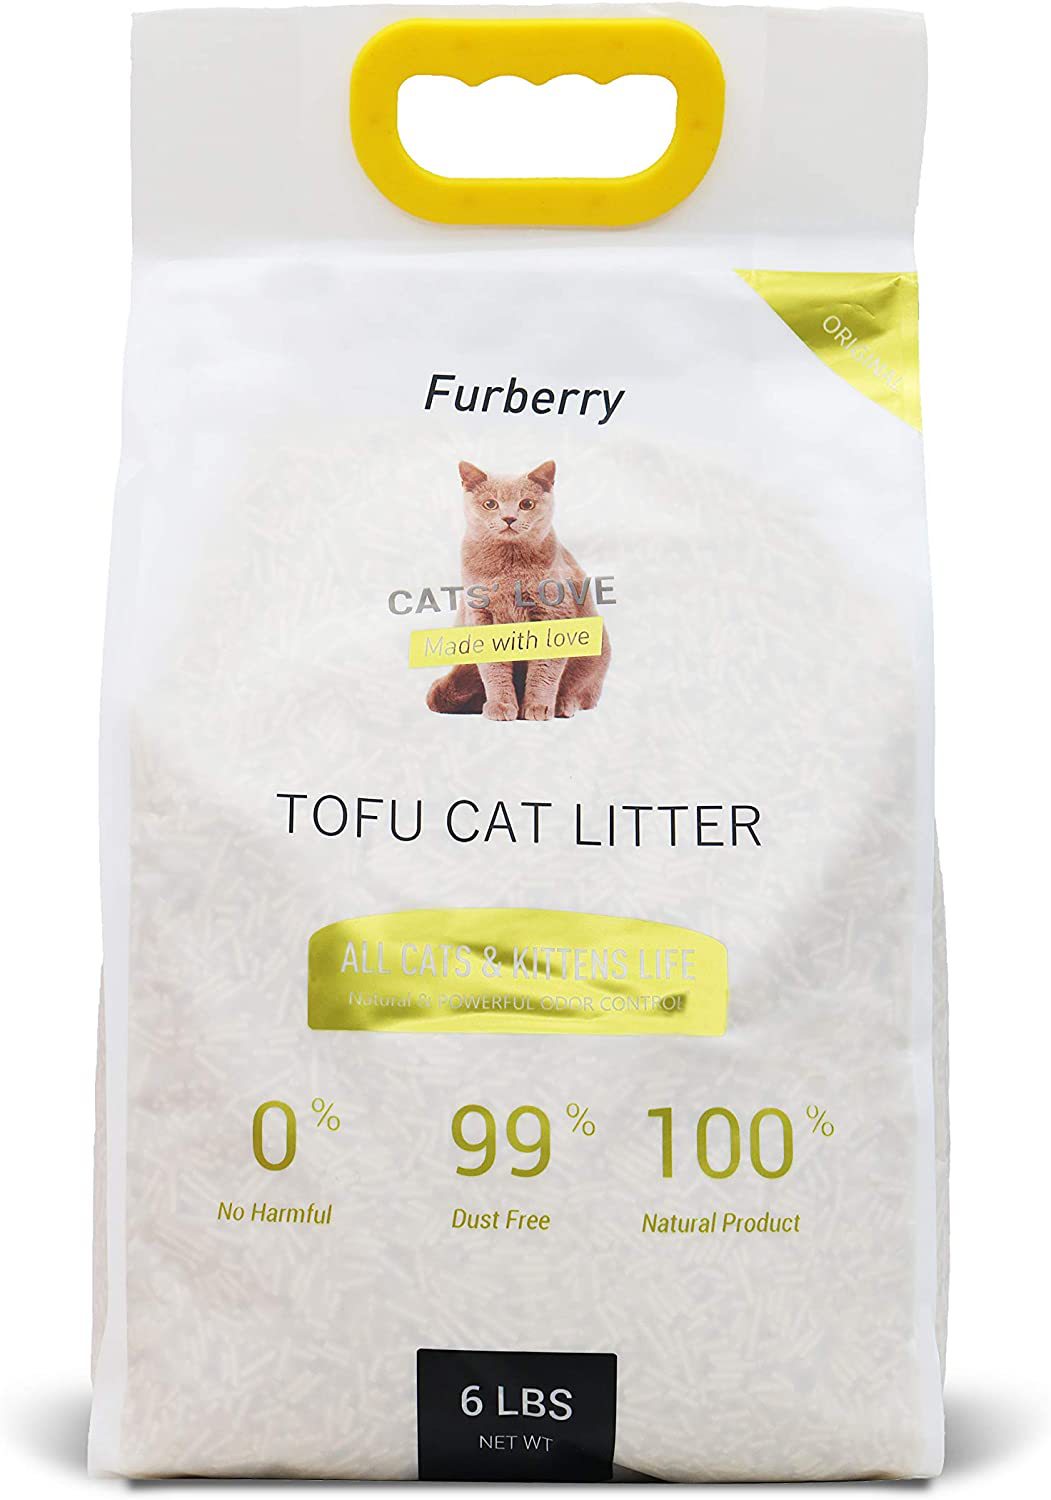 Furberry Clumping Cat Litter Tofu Natural Cat Litter Unscented, Pack of 2, 12Lb. Animals & Pet Supplies > Pet Supplies > Cat Supplies > Cat Litter Furberry   